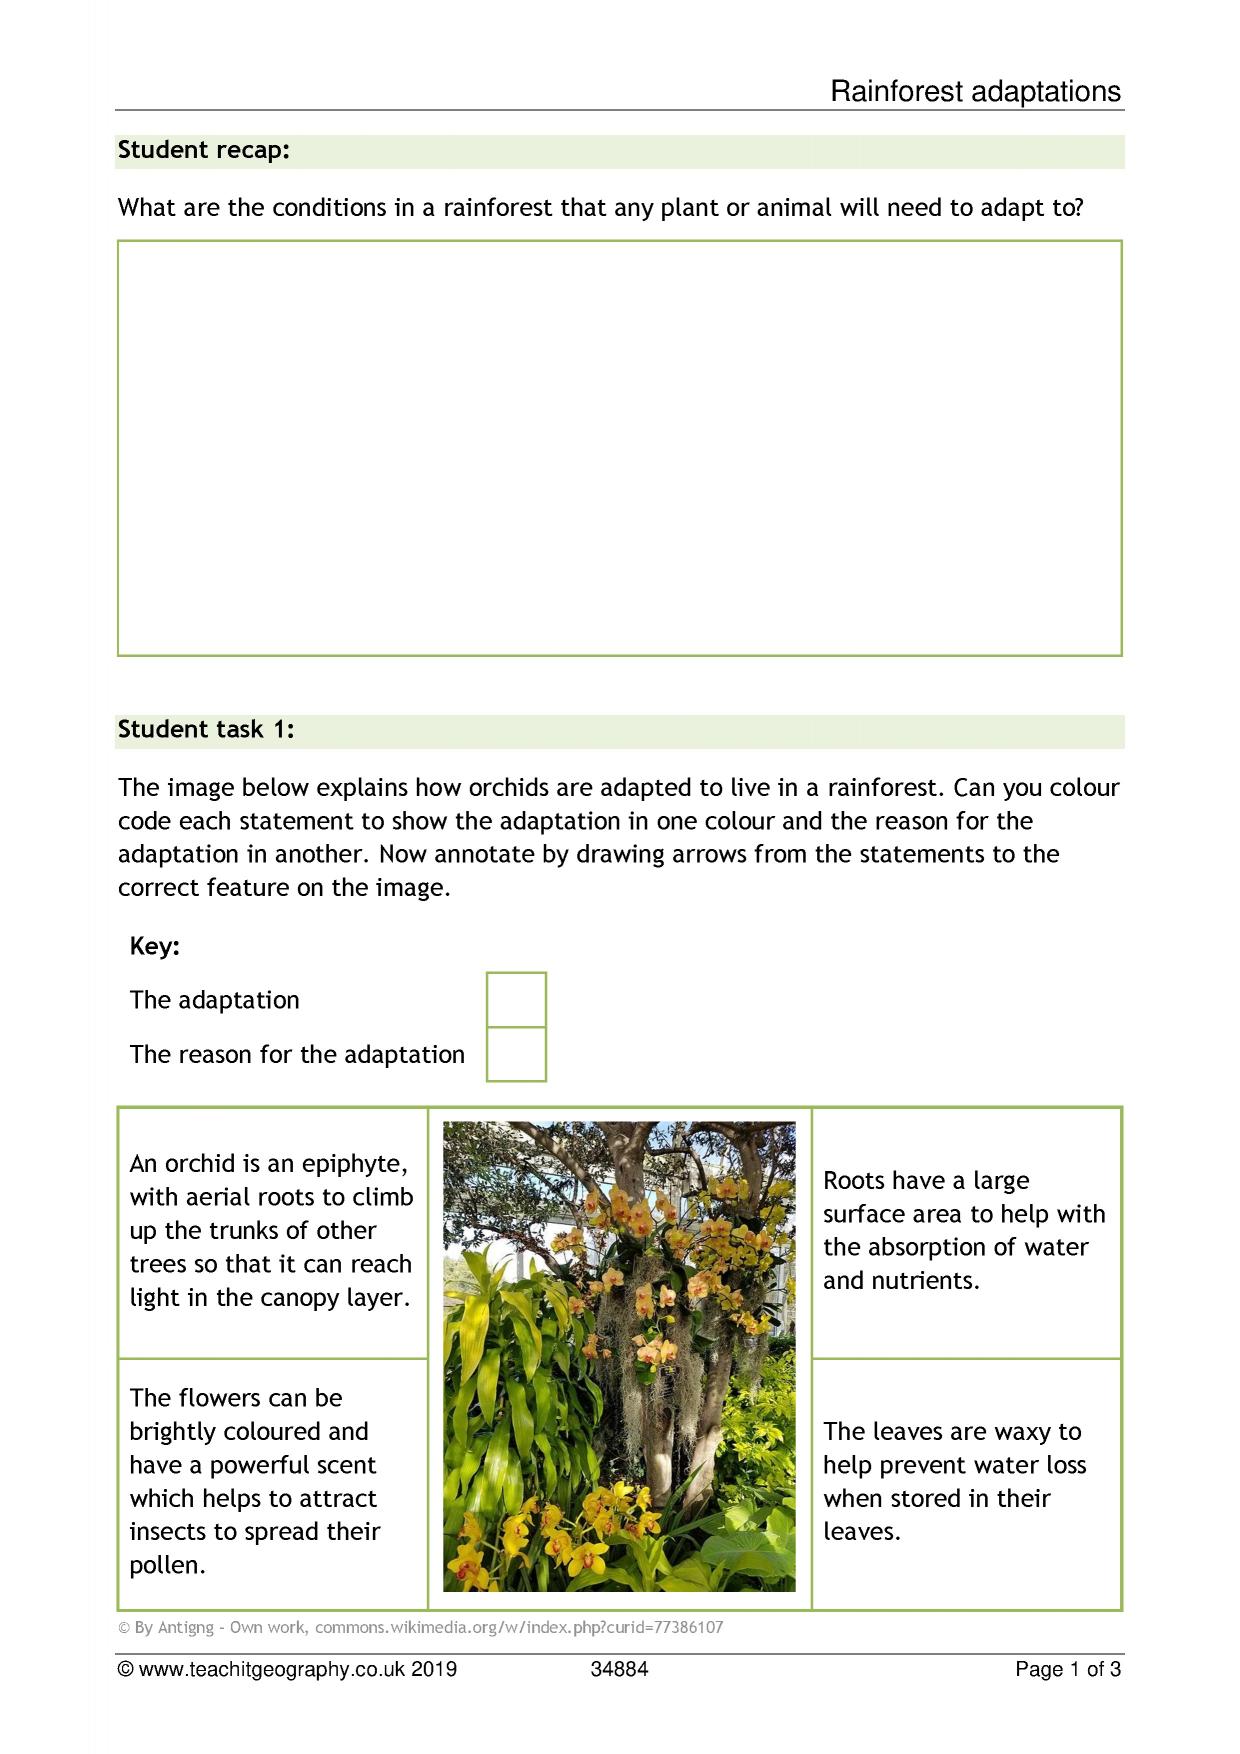 Rainforest plant adaptations | KS3-4 geography | Teachit